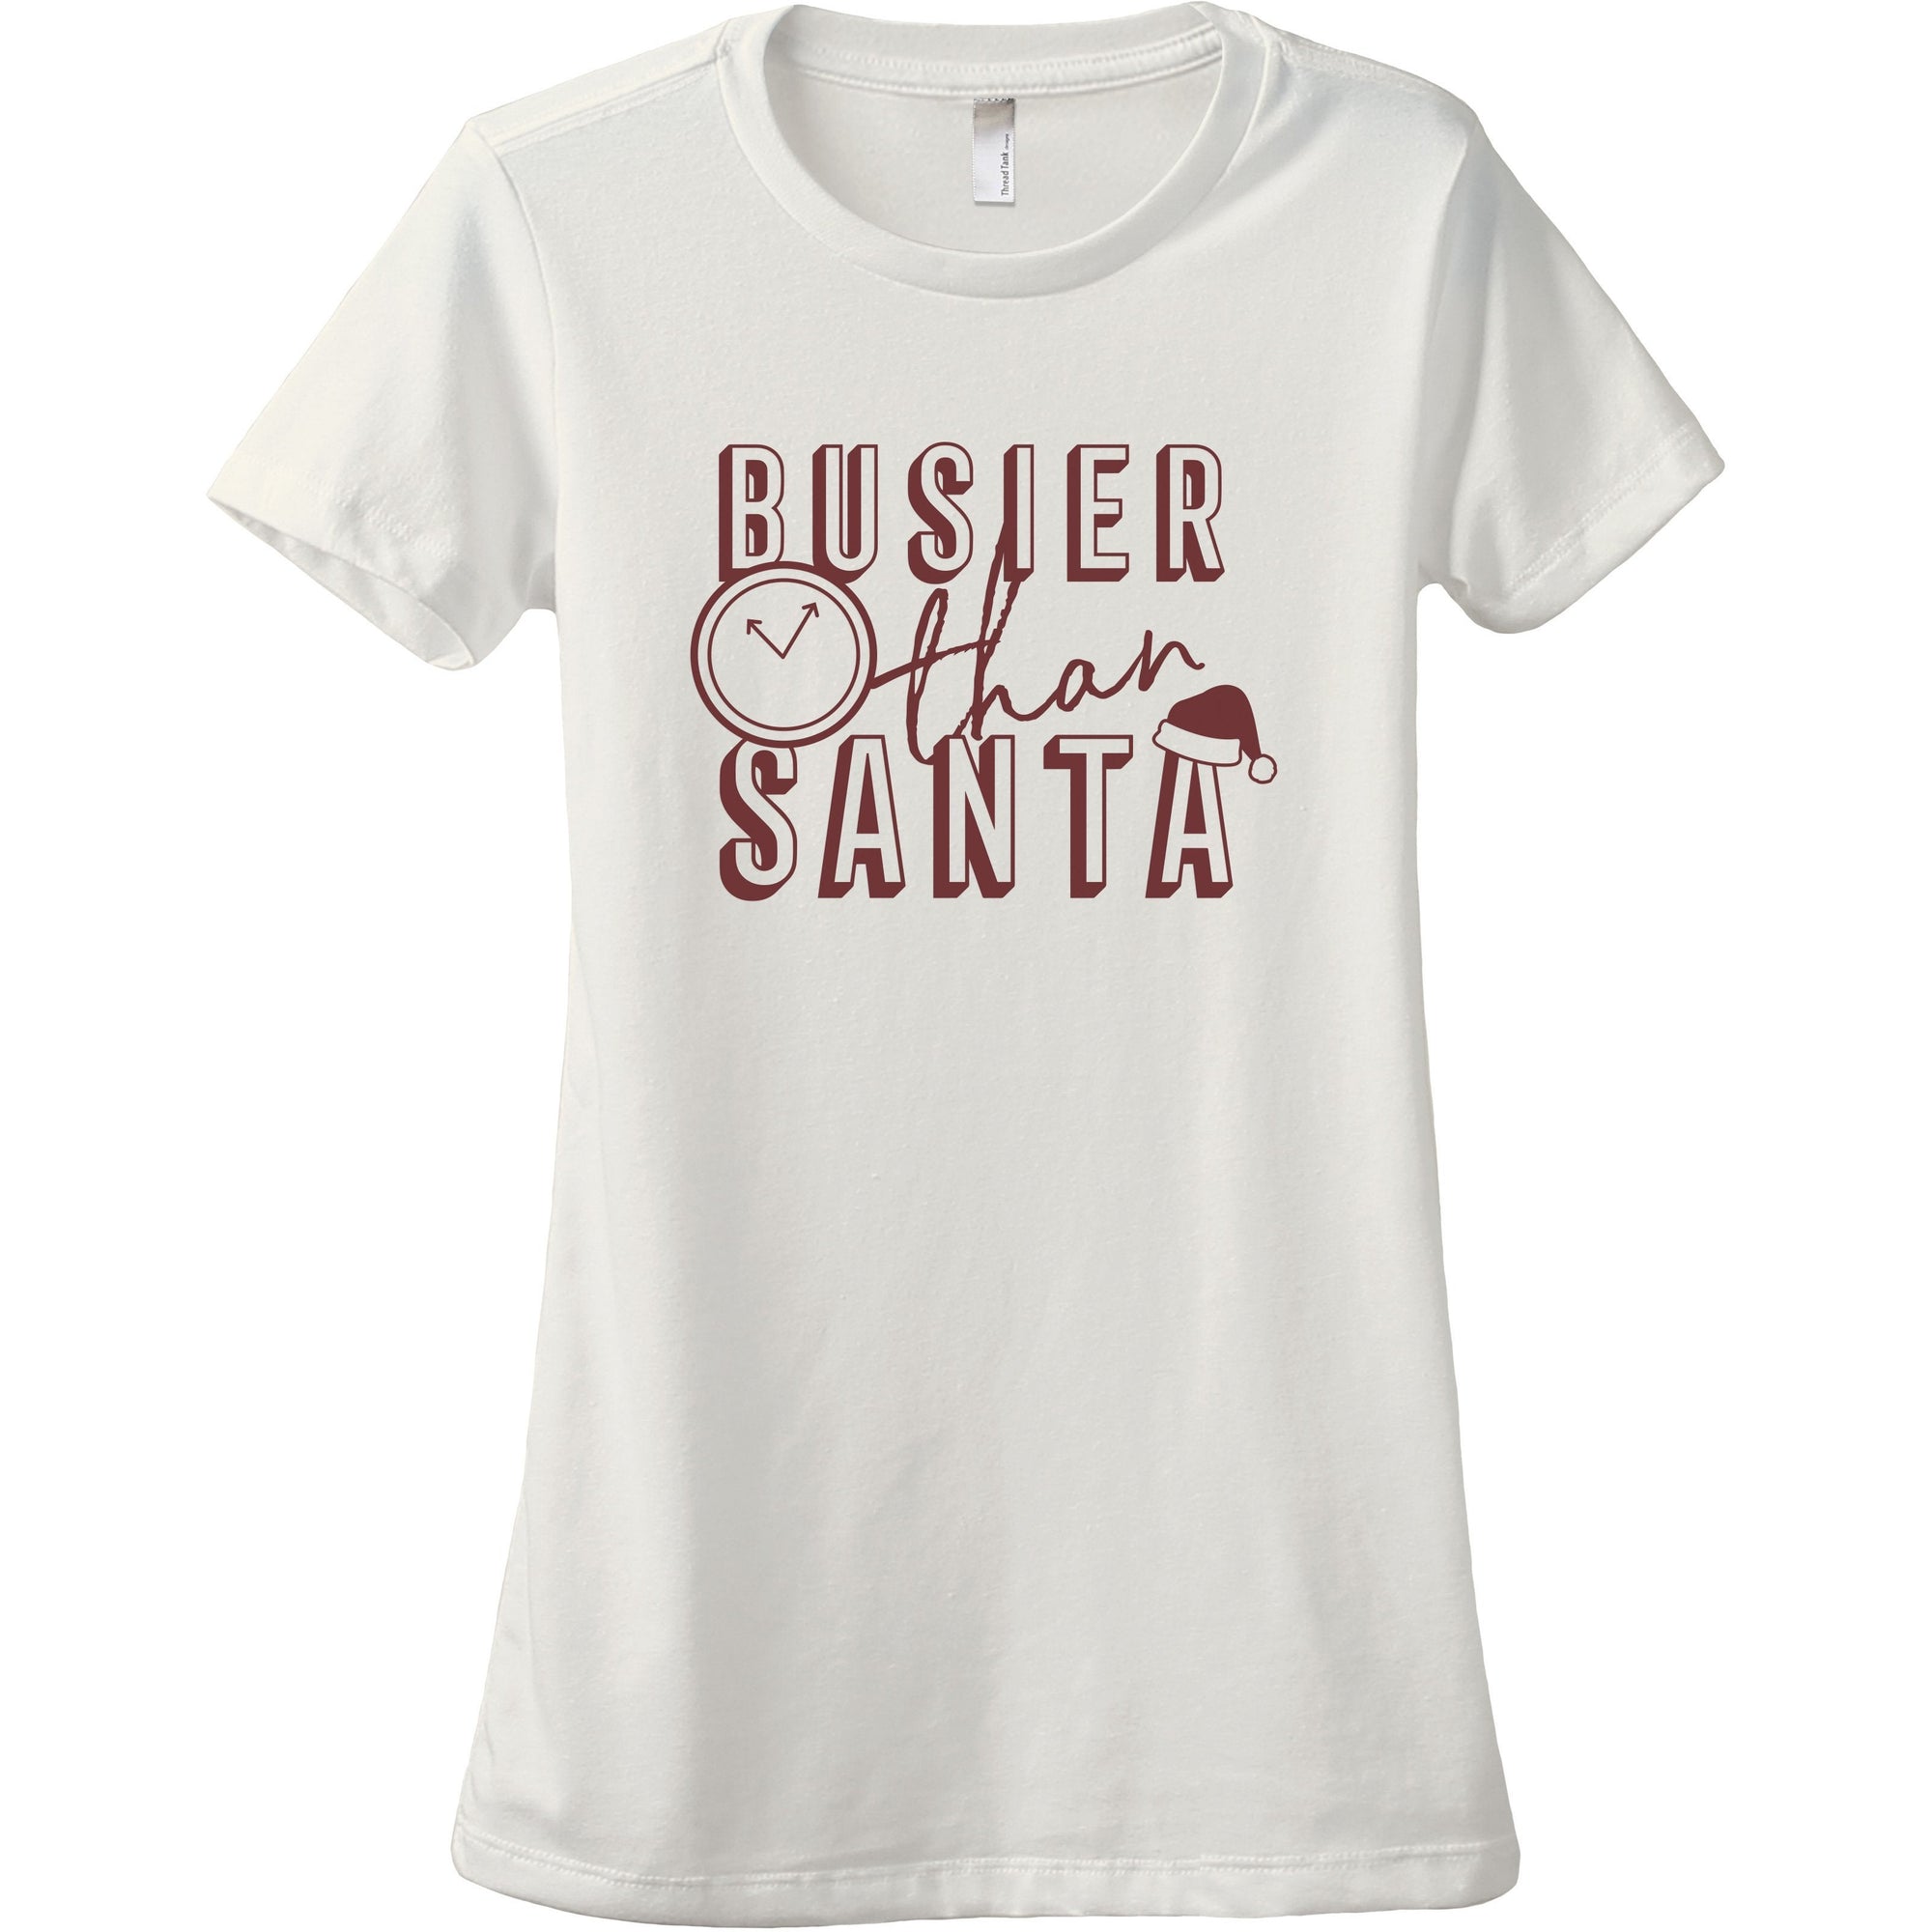 Busier Than Santa Women's Relaxed Crewneck T-Shirt Top Tee Vintage White Scarlet Scarlet Print